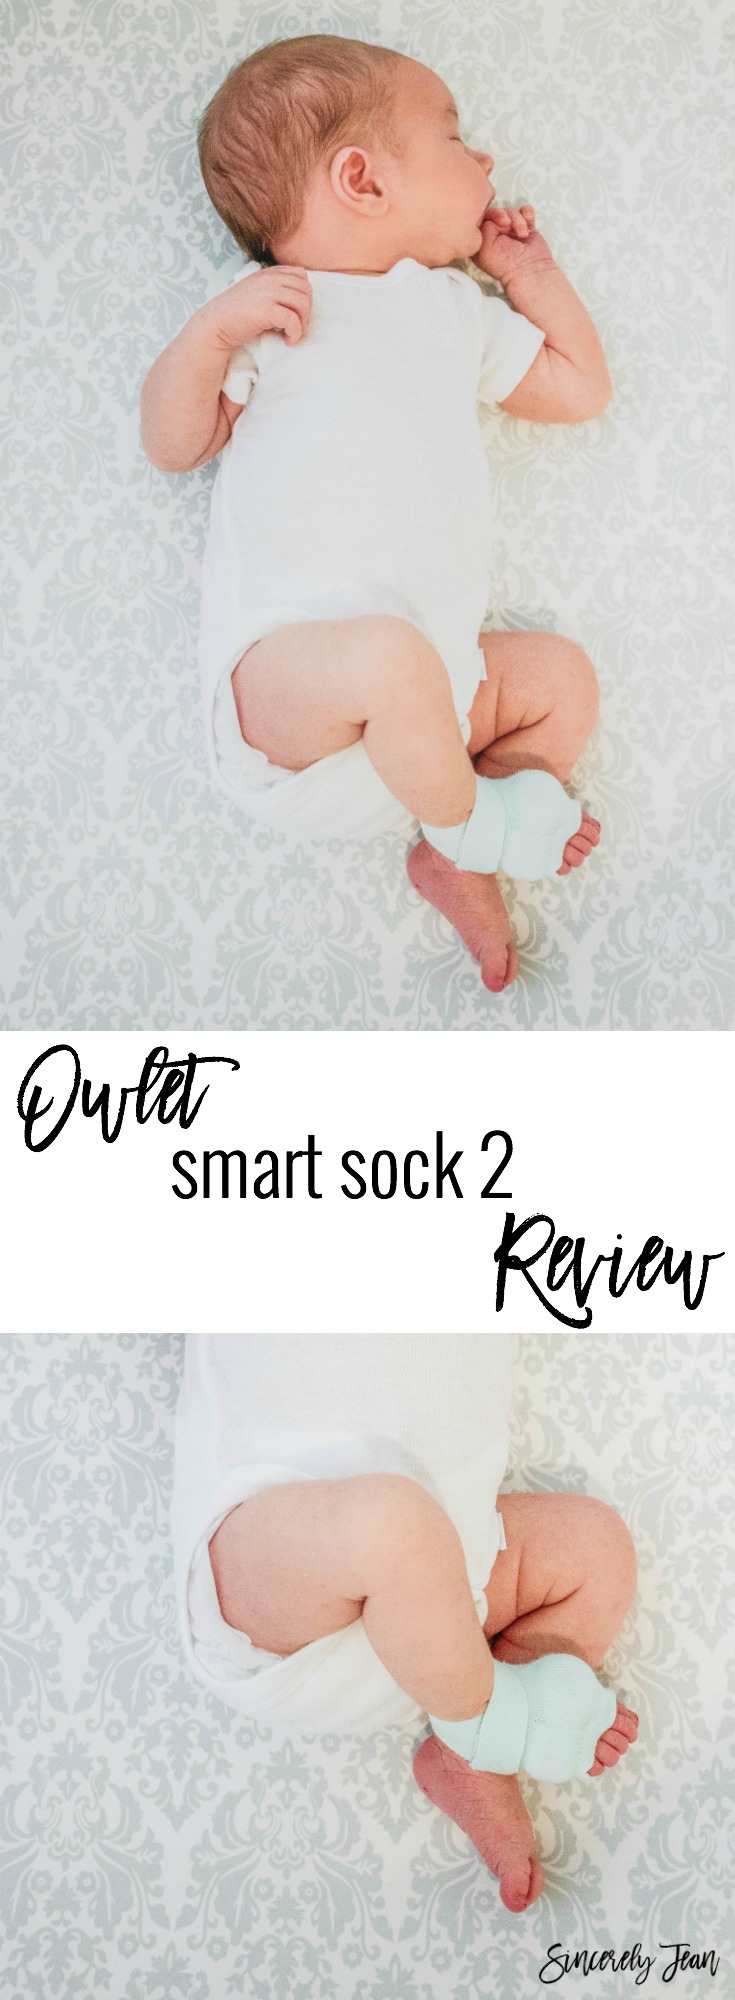 Review_owlet_smart_sock_2